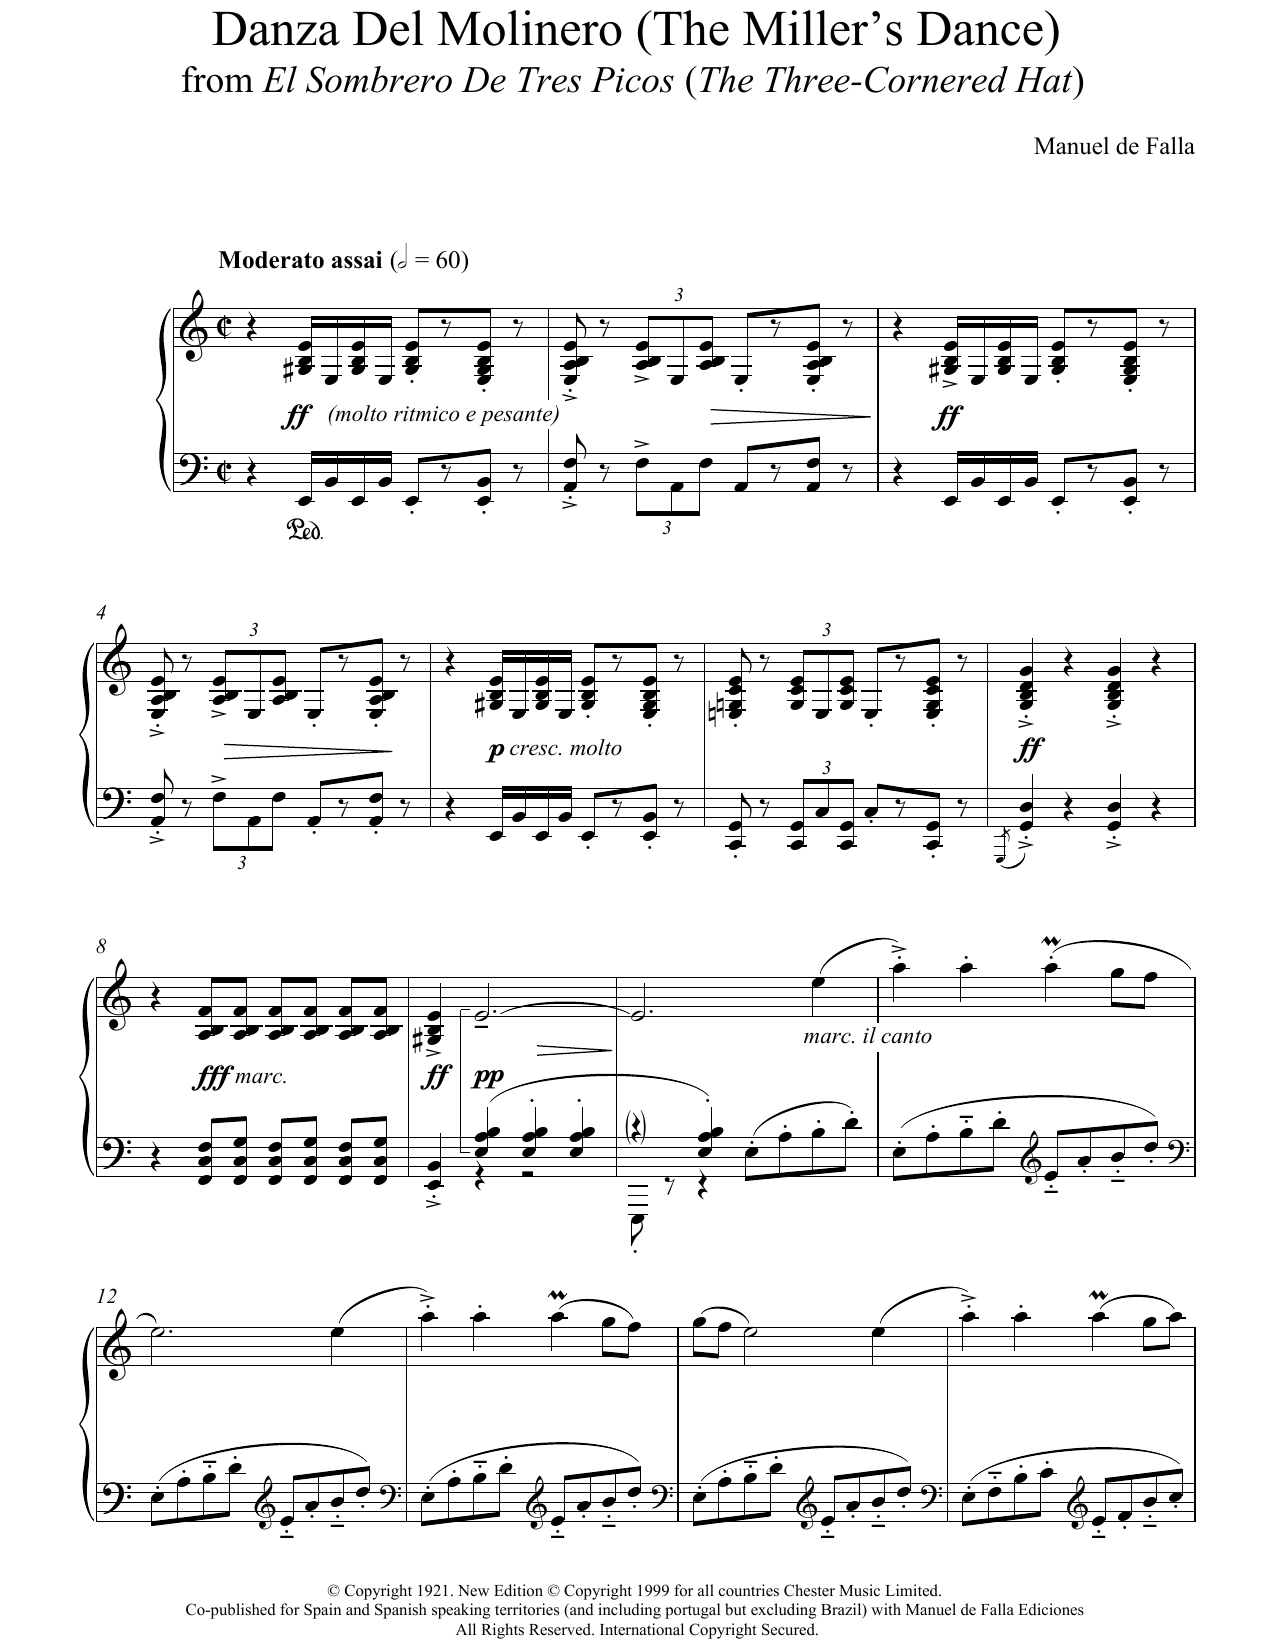 Manuel De Falla Danza Del Molinero (The Miller's Dance) (From El Sombrero De Tres Picos (The Three-Cornered Hat) sheet music notes and chords arranged for Piano Solo